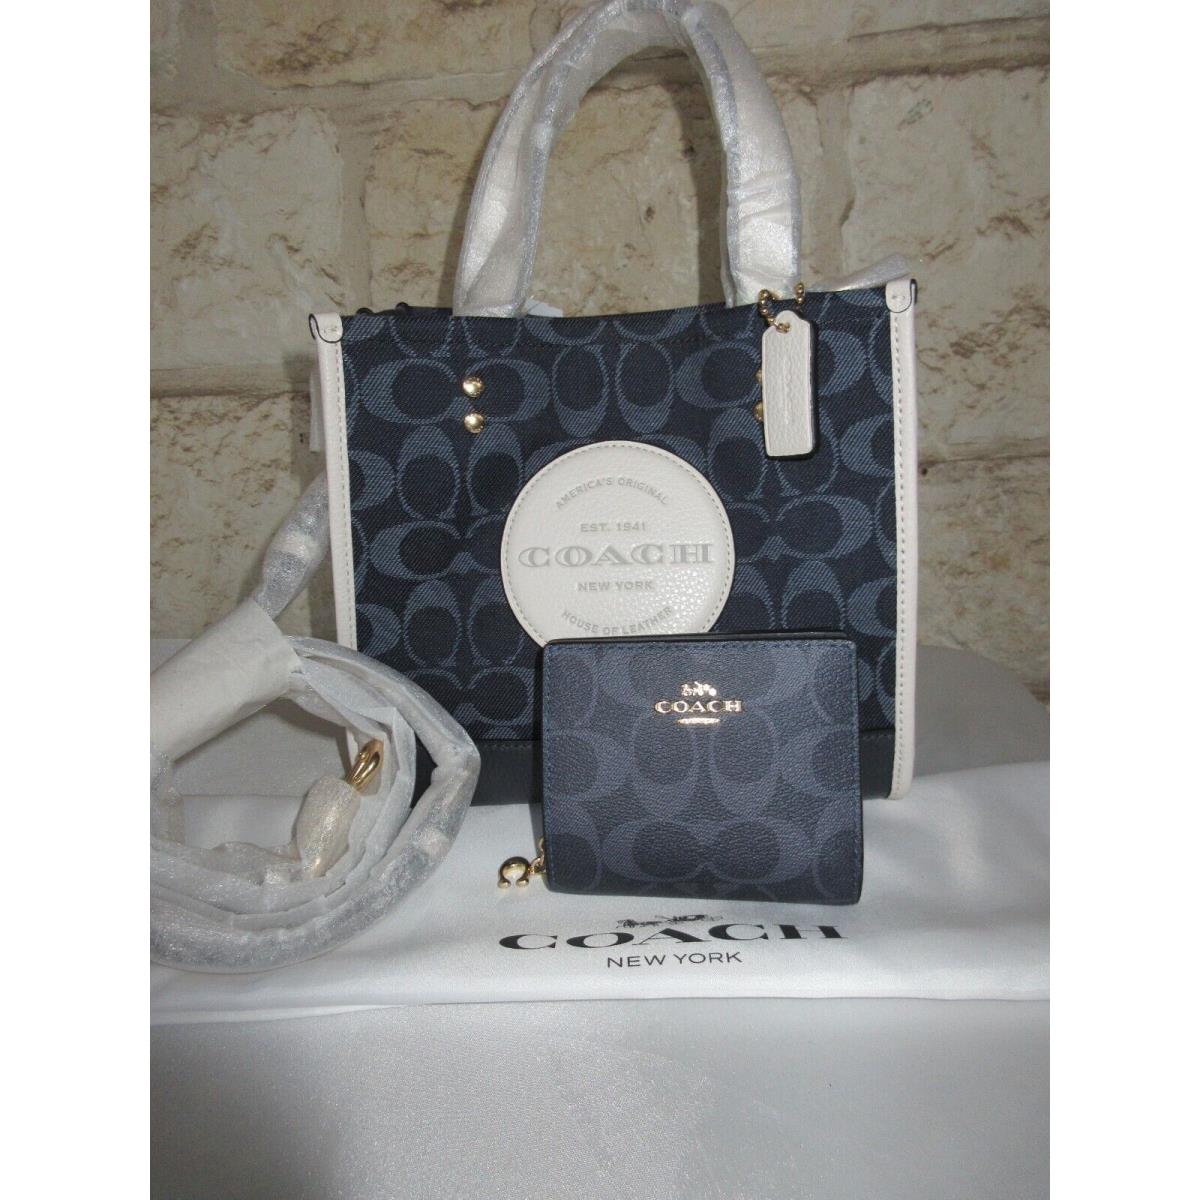 Coach purse and wallet set - Women's handbags